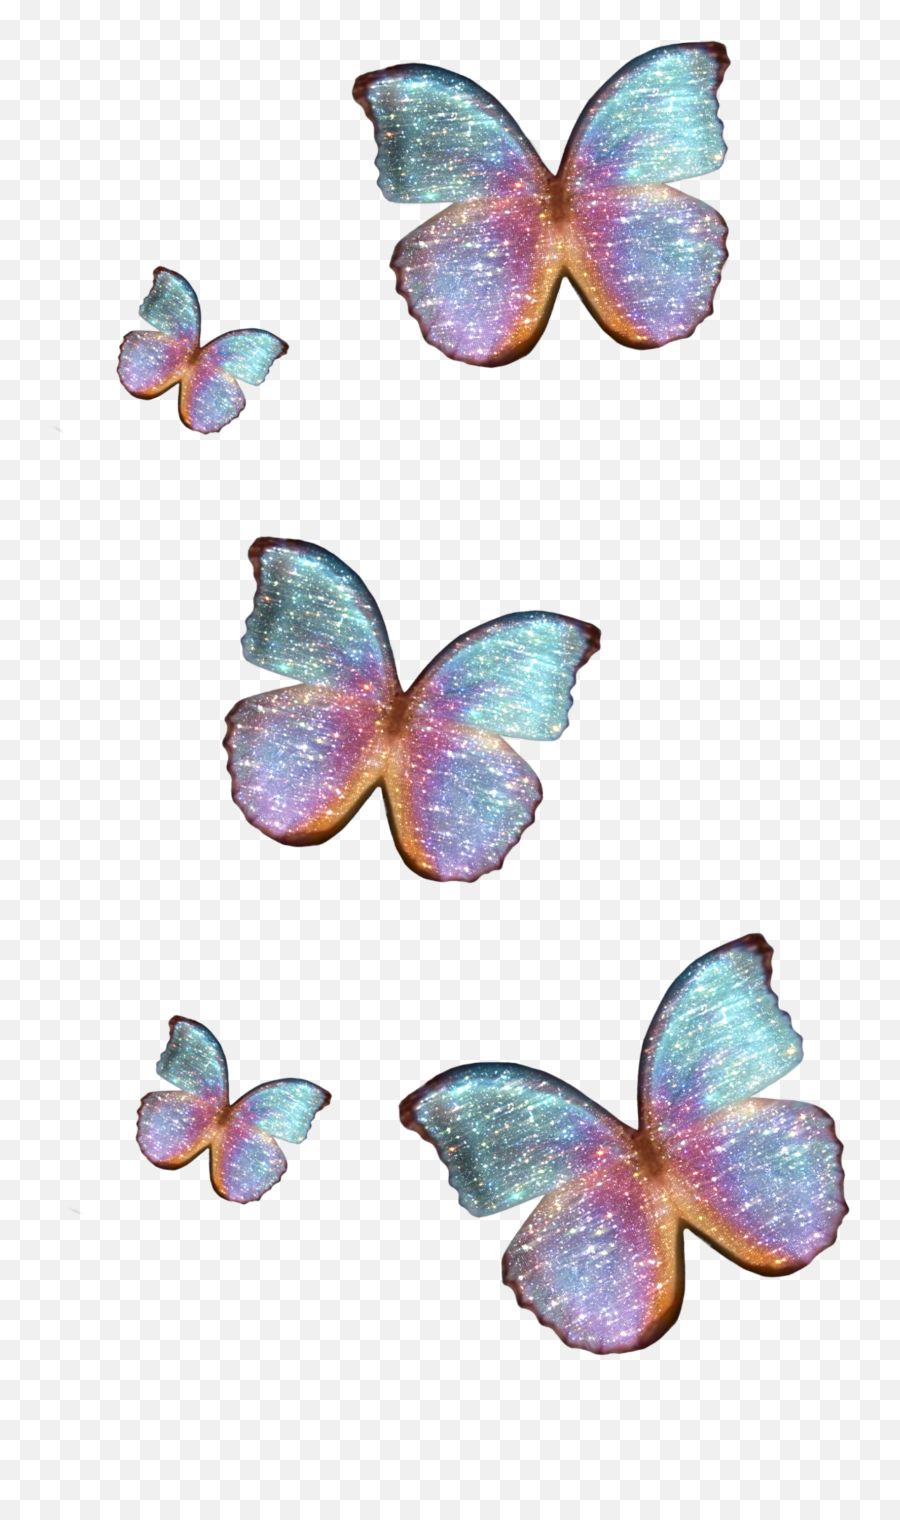 The Most Edited Borboleta Picsart Emoji,Fowers And Butterfly Emojis